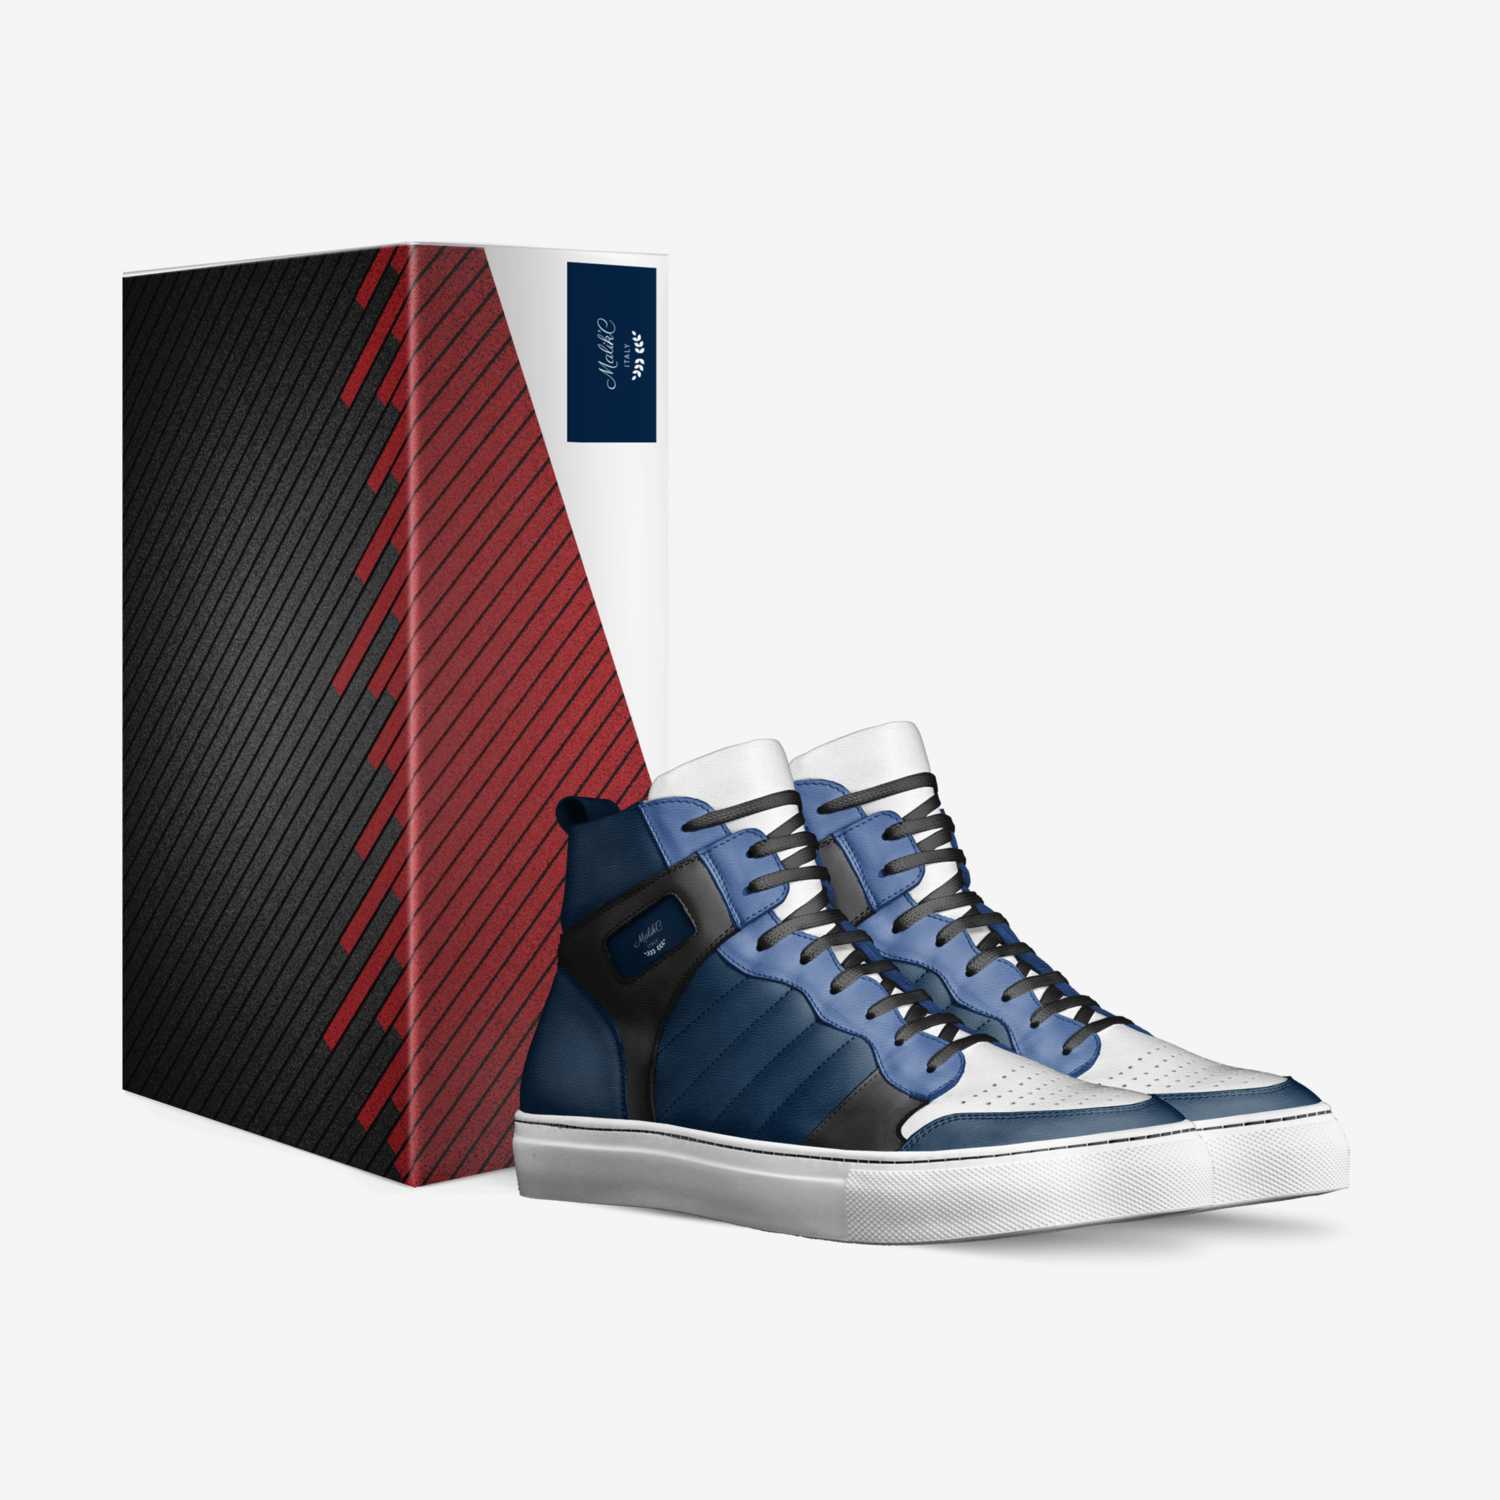 Malik'C custom made in Italy shoes by Malik Charles | Box view